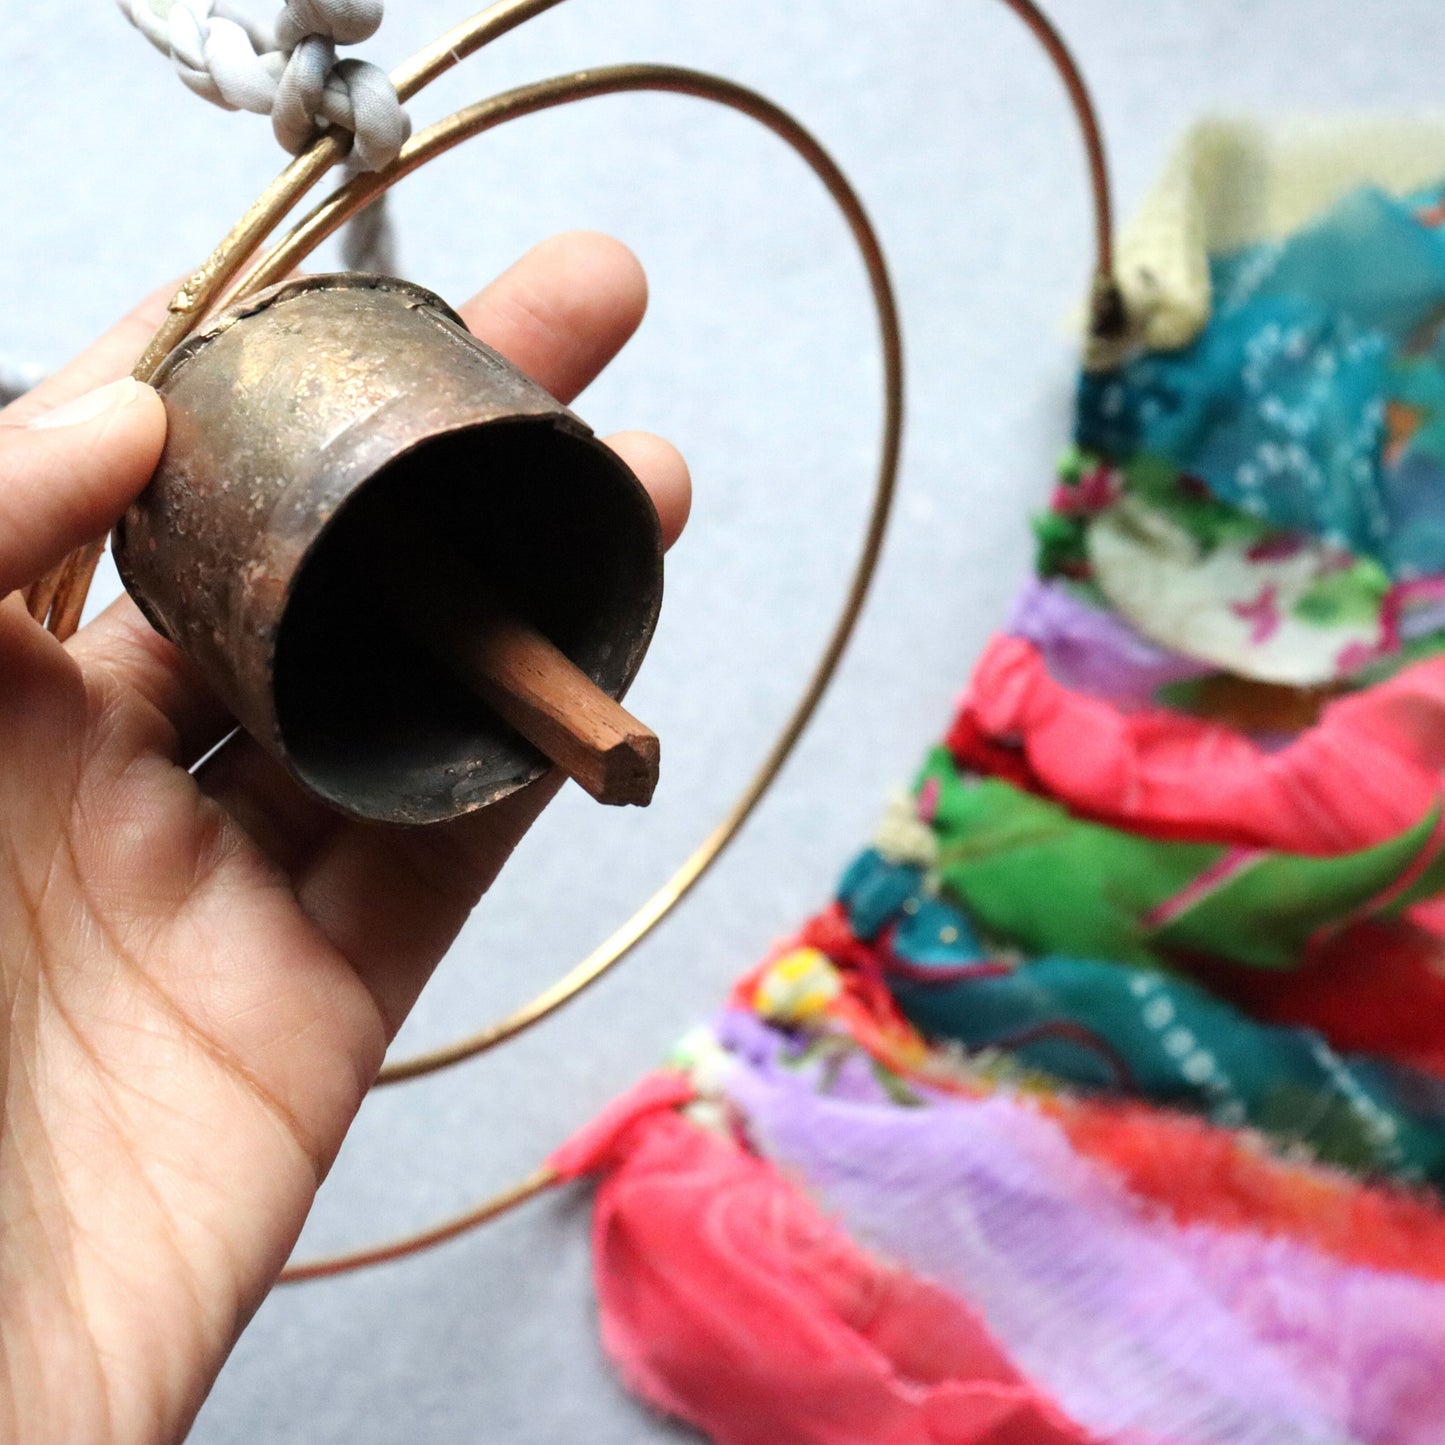 Surya Circle Chime with Rustic Bell - Metal, Assorted Cloth Tassels, Handmade, Twisted sari hanging loop - Aksa Home Decor 